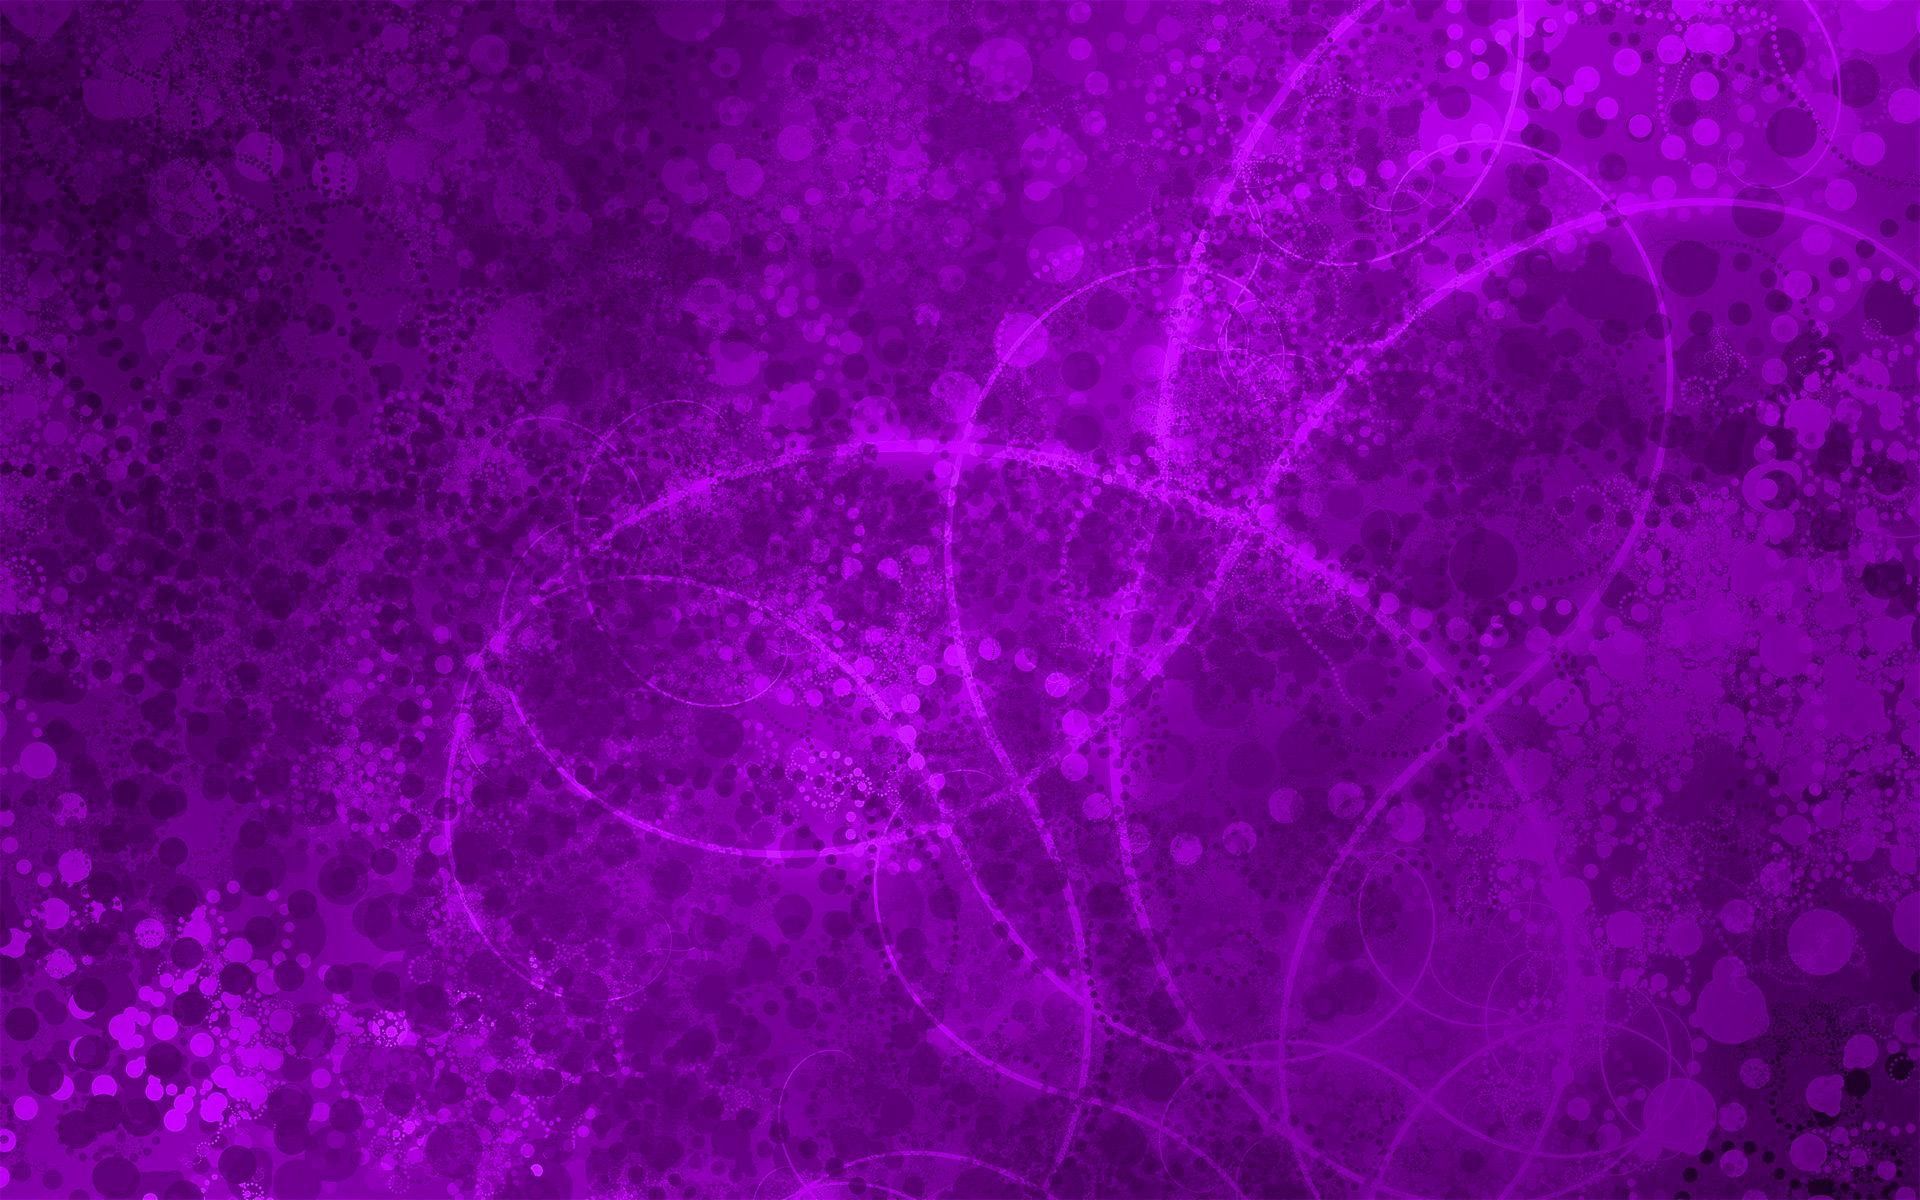 Abstract Swirls Purple Wallpaper Desktop Image Download Free